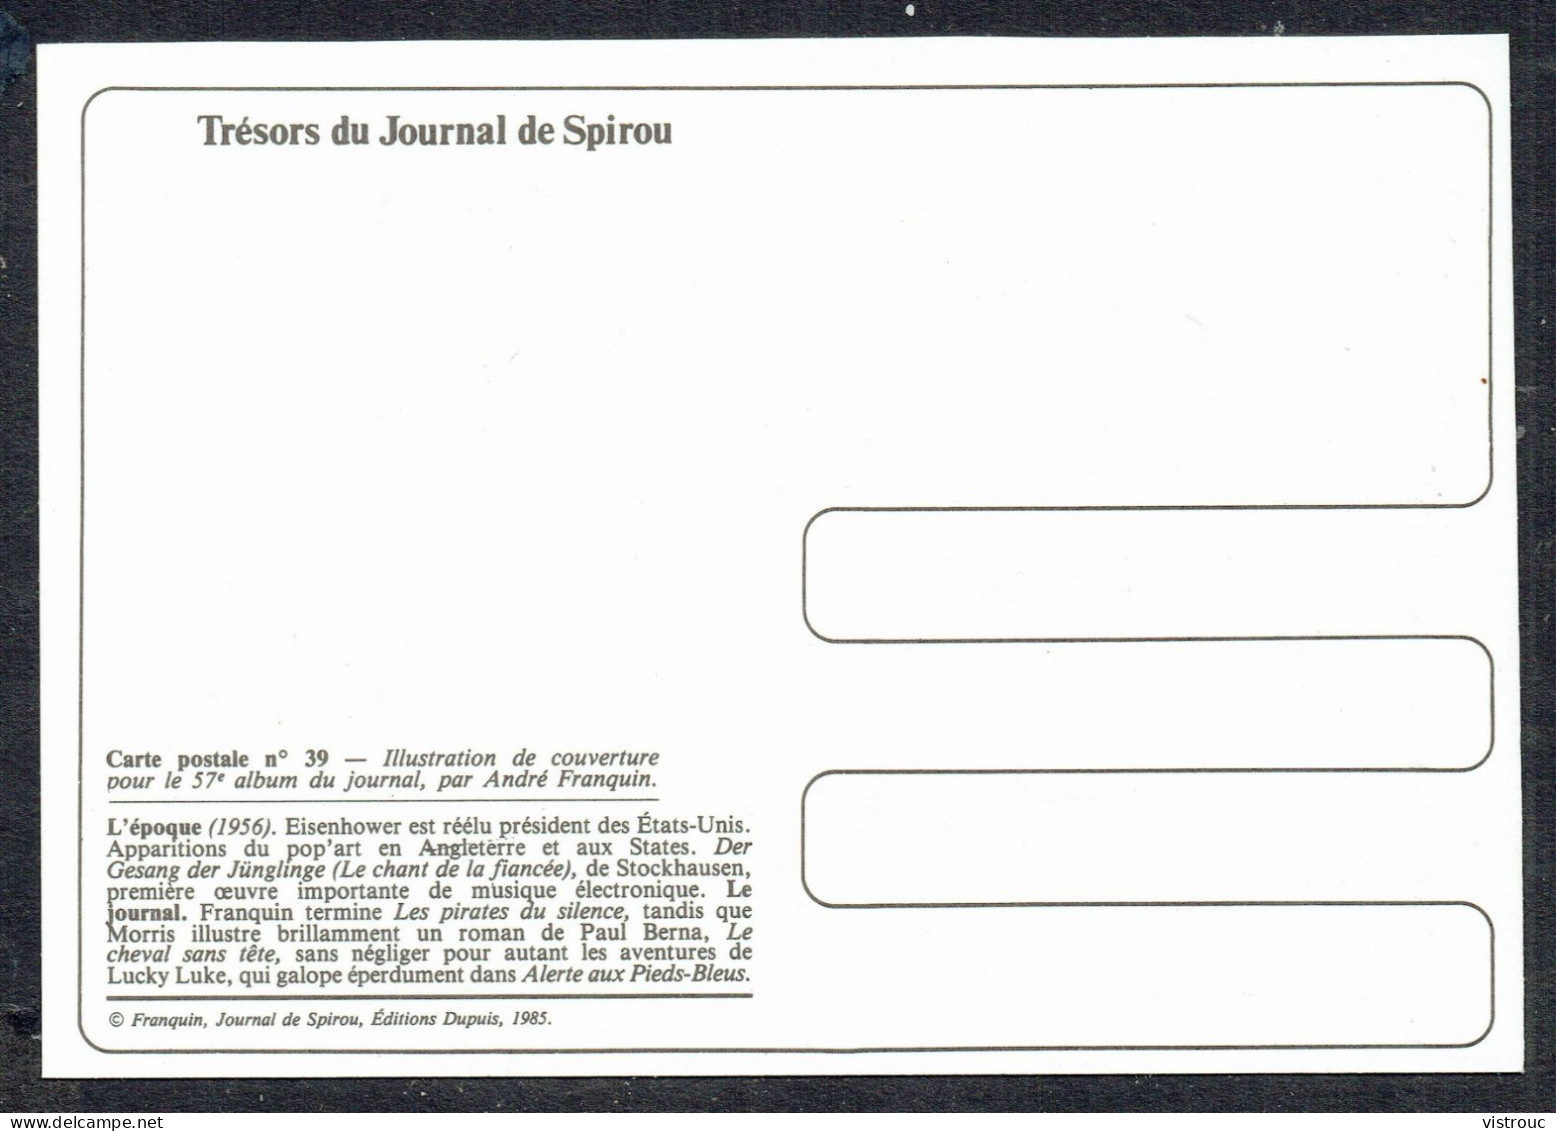 SPIROU - CP N° 39 : Illustration Couverture Album N° 57 De FRANQUIN - Non Circulé - Not Circulated - Ed. DUPUIS - 1985. - Fumetti